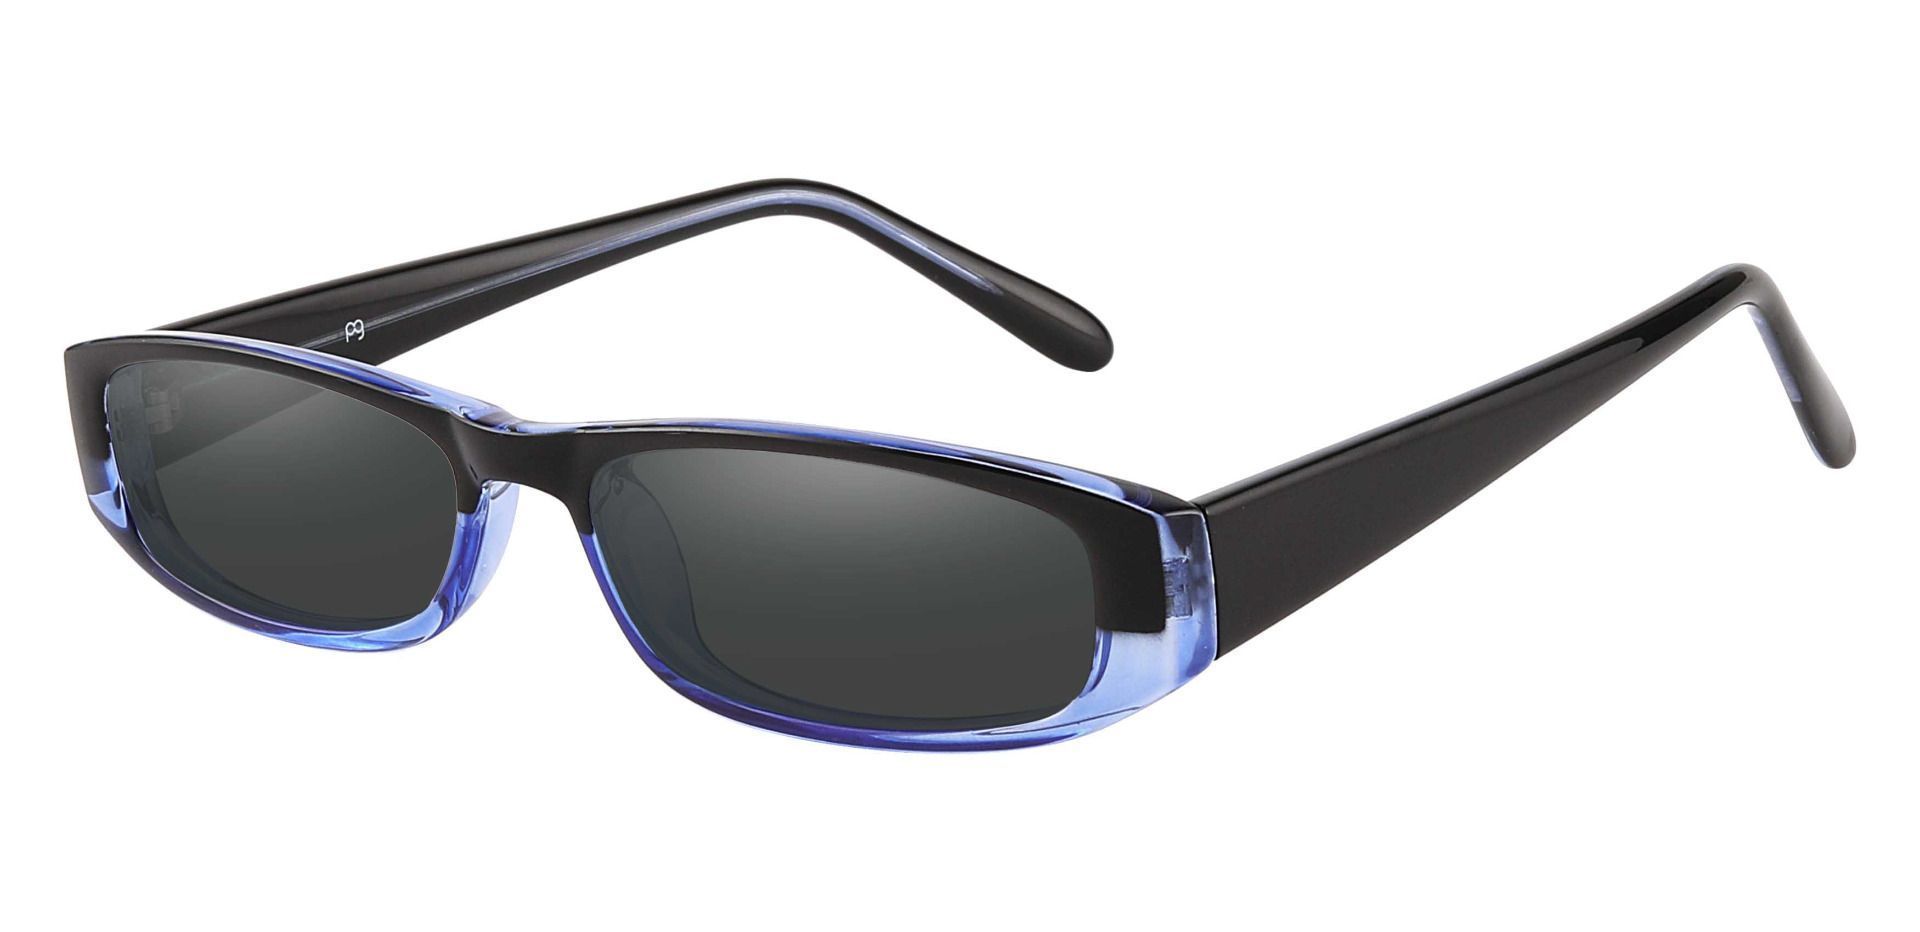 Elgin Rectangle Non-Rx Sunglasses - Blue Frame With Gray Lenses